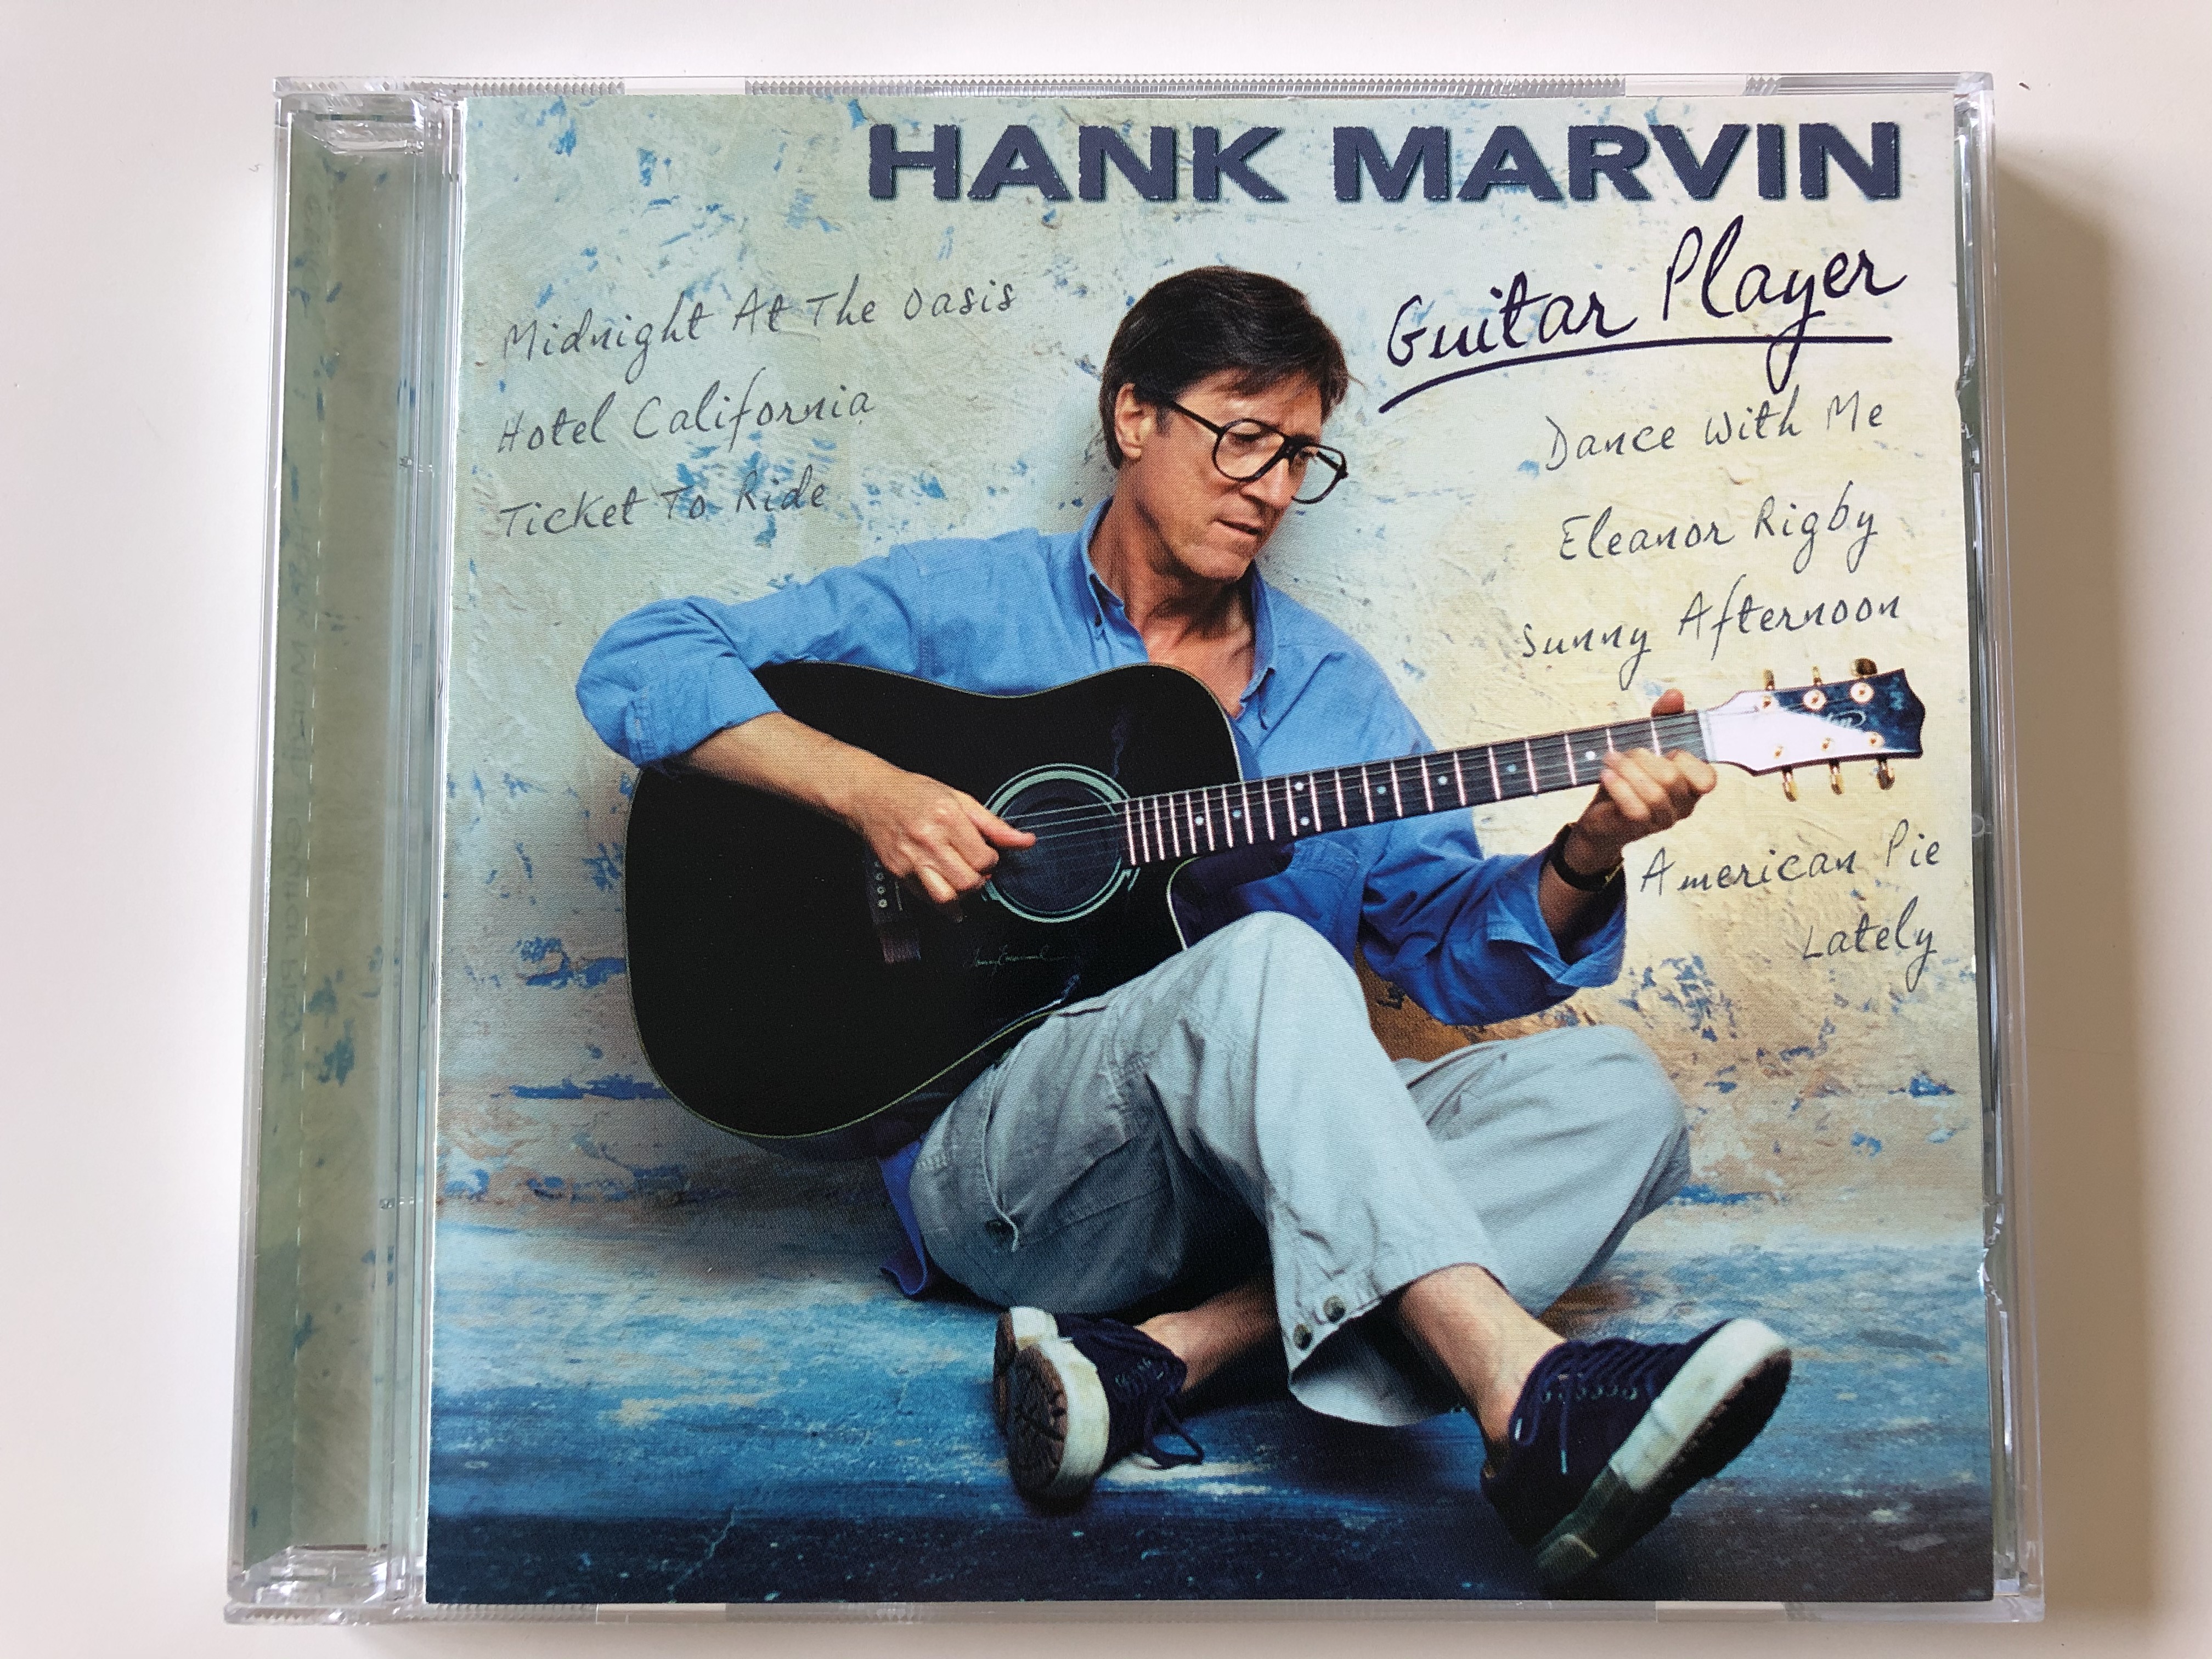 hank-marvin-guitar-player-cmc-records-audio-cd-2002-5370192-1-.jpg